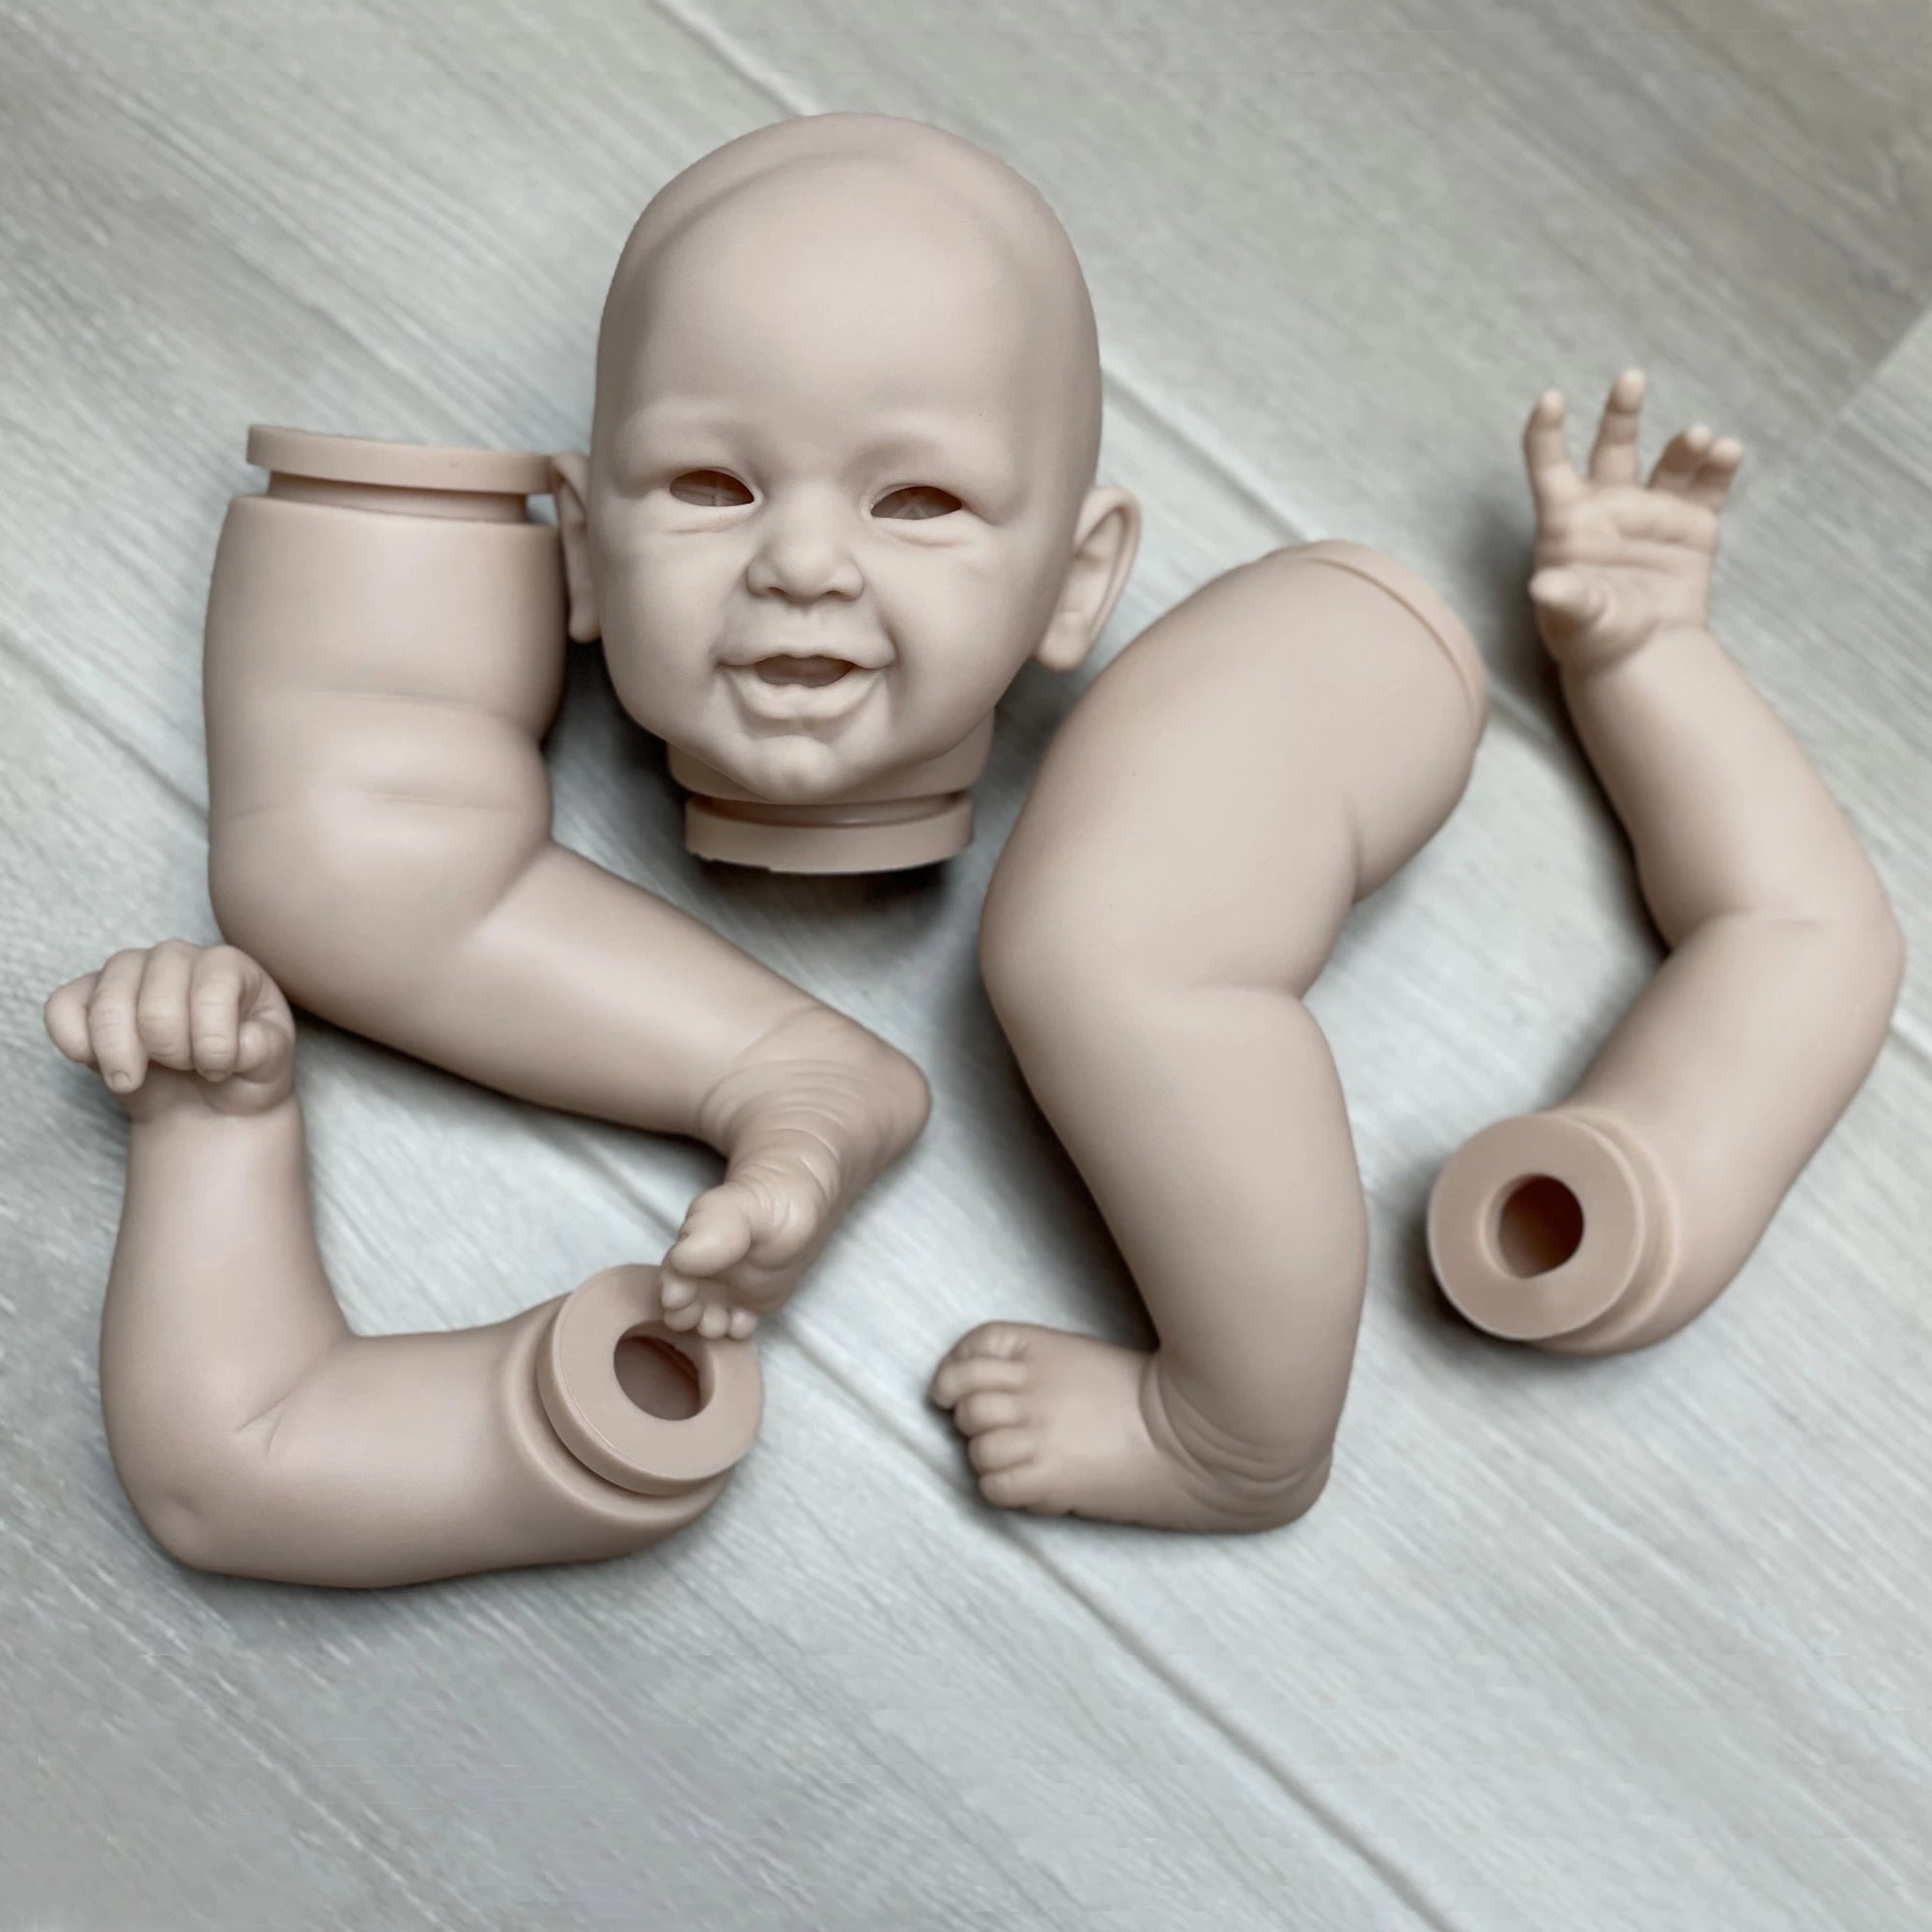 Unpainted doll Kits Reborn Doll Kits Phoenix By Andrea Arcello 20 Inch Baby Parts Accessory